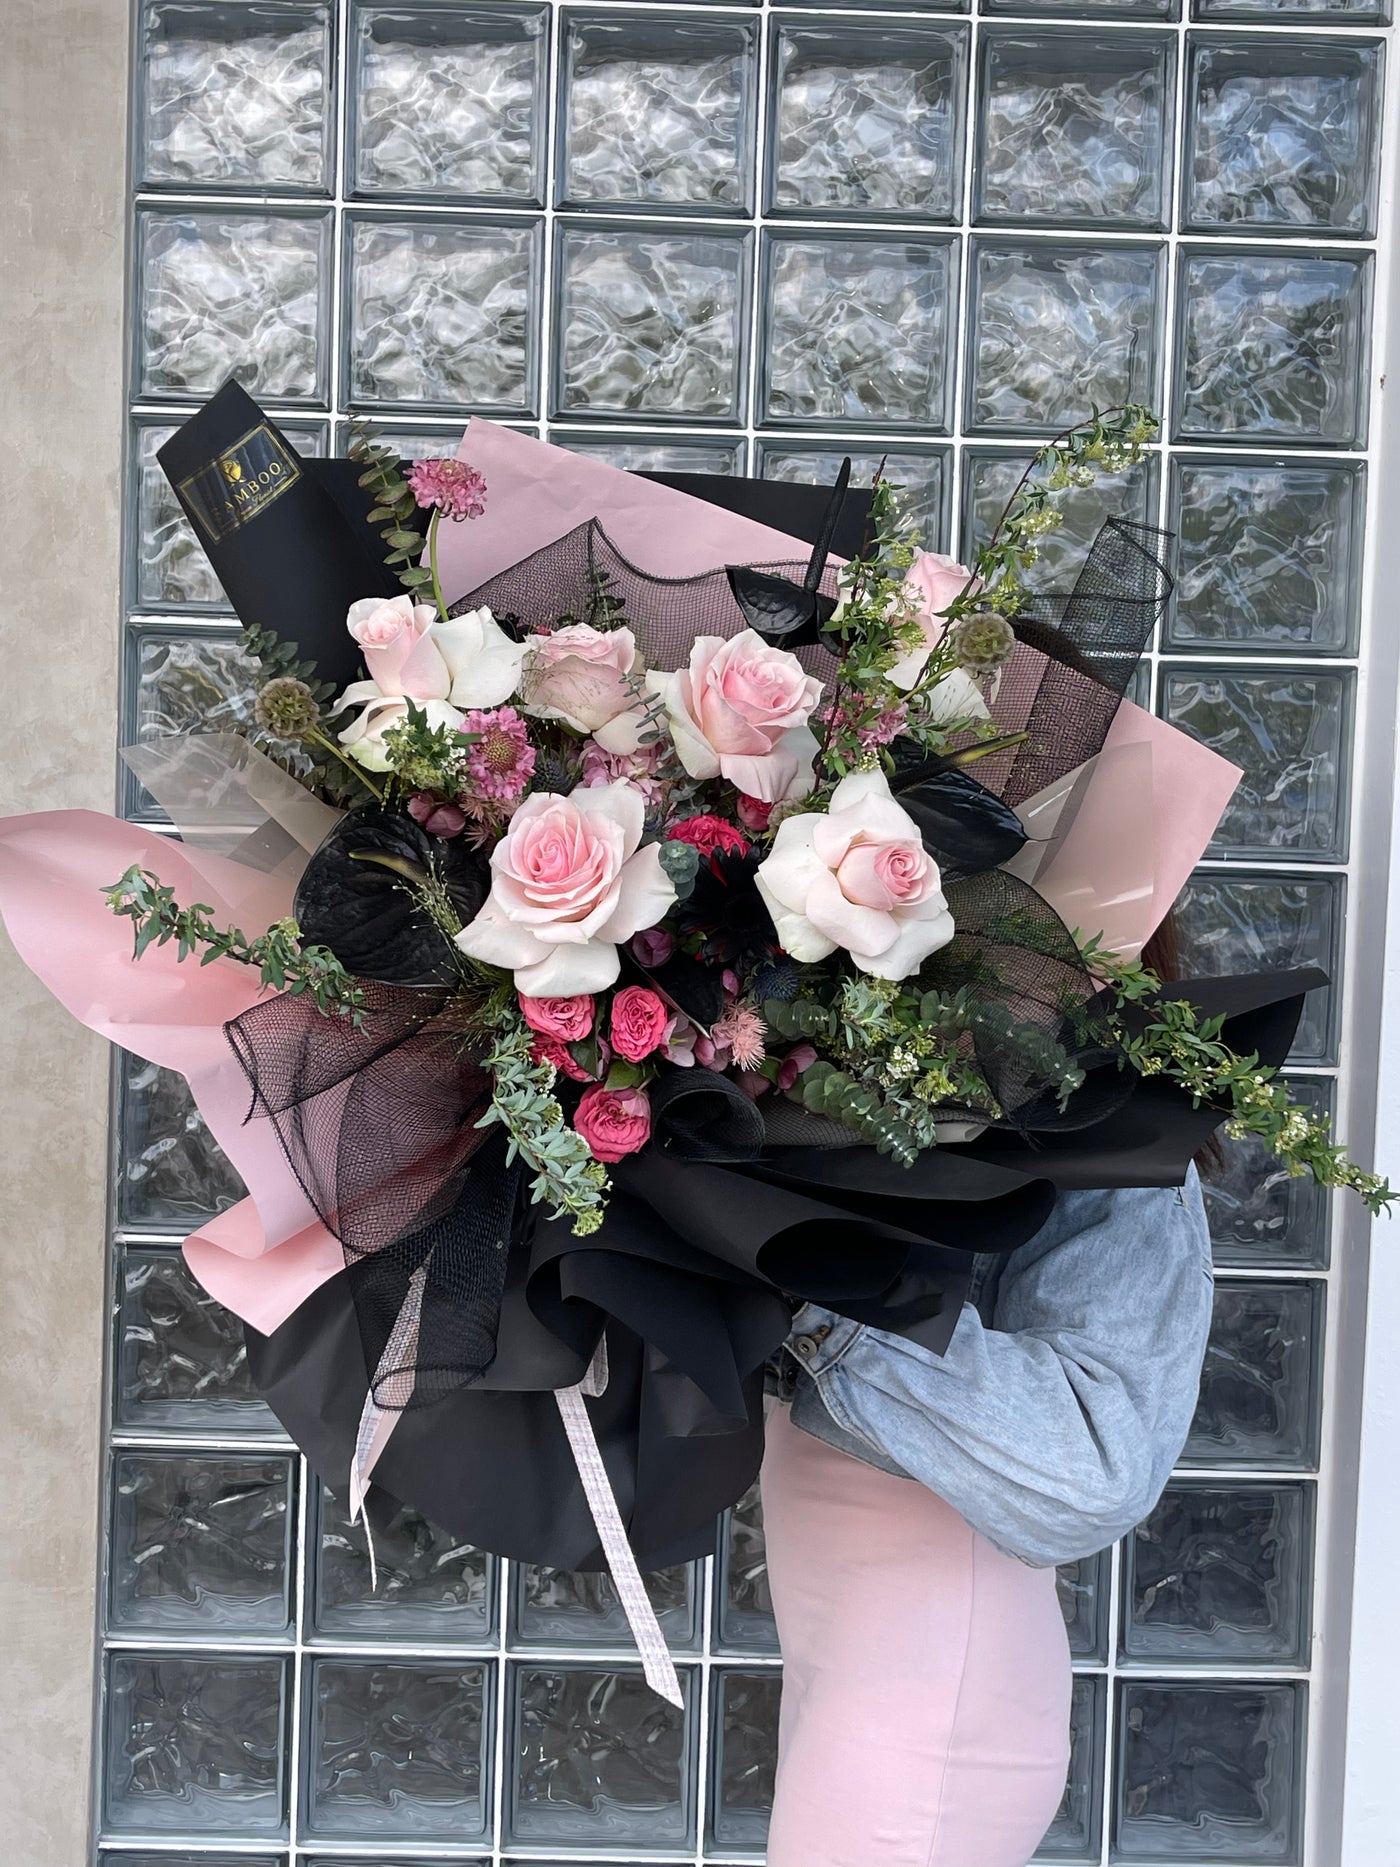 Omakase Black Pink Flower Bouquet in Penang delivery